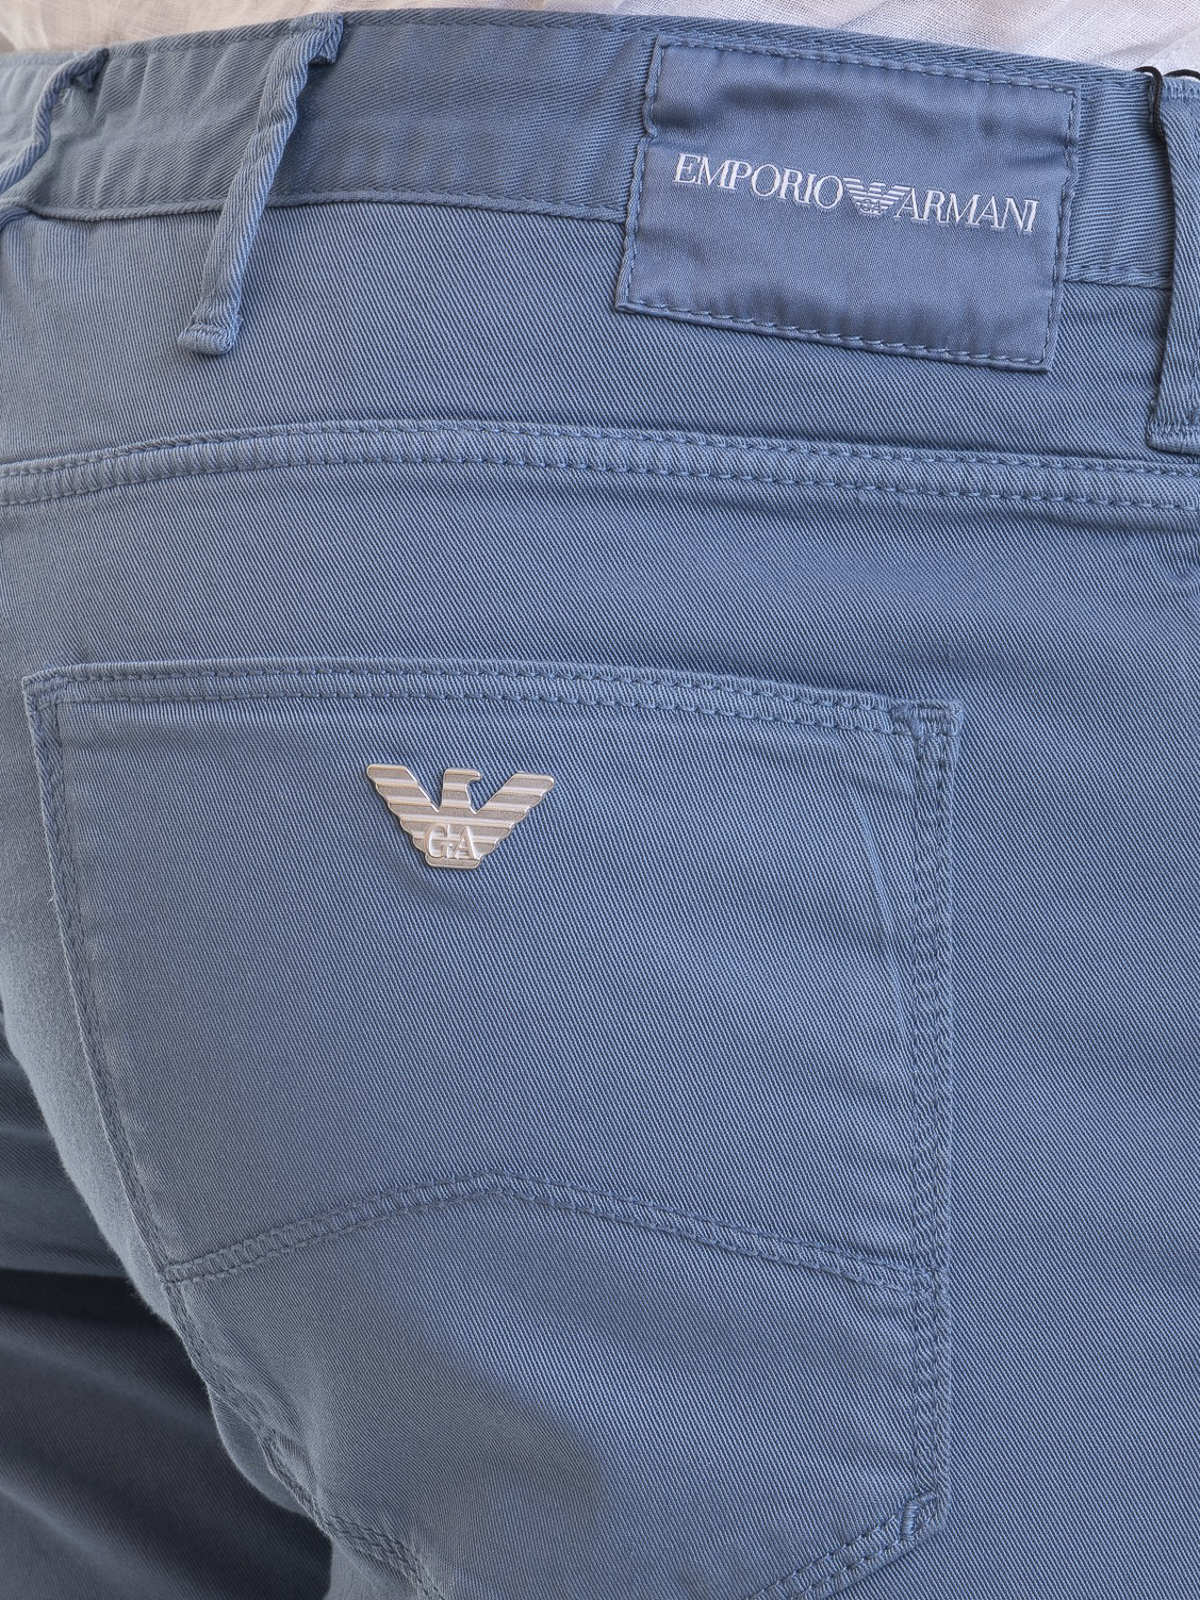 Trousers Shorts Emporio Armani - blue cotton style short pants -